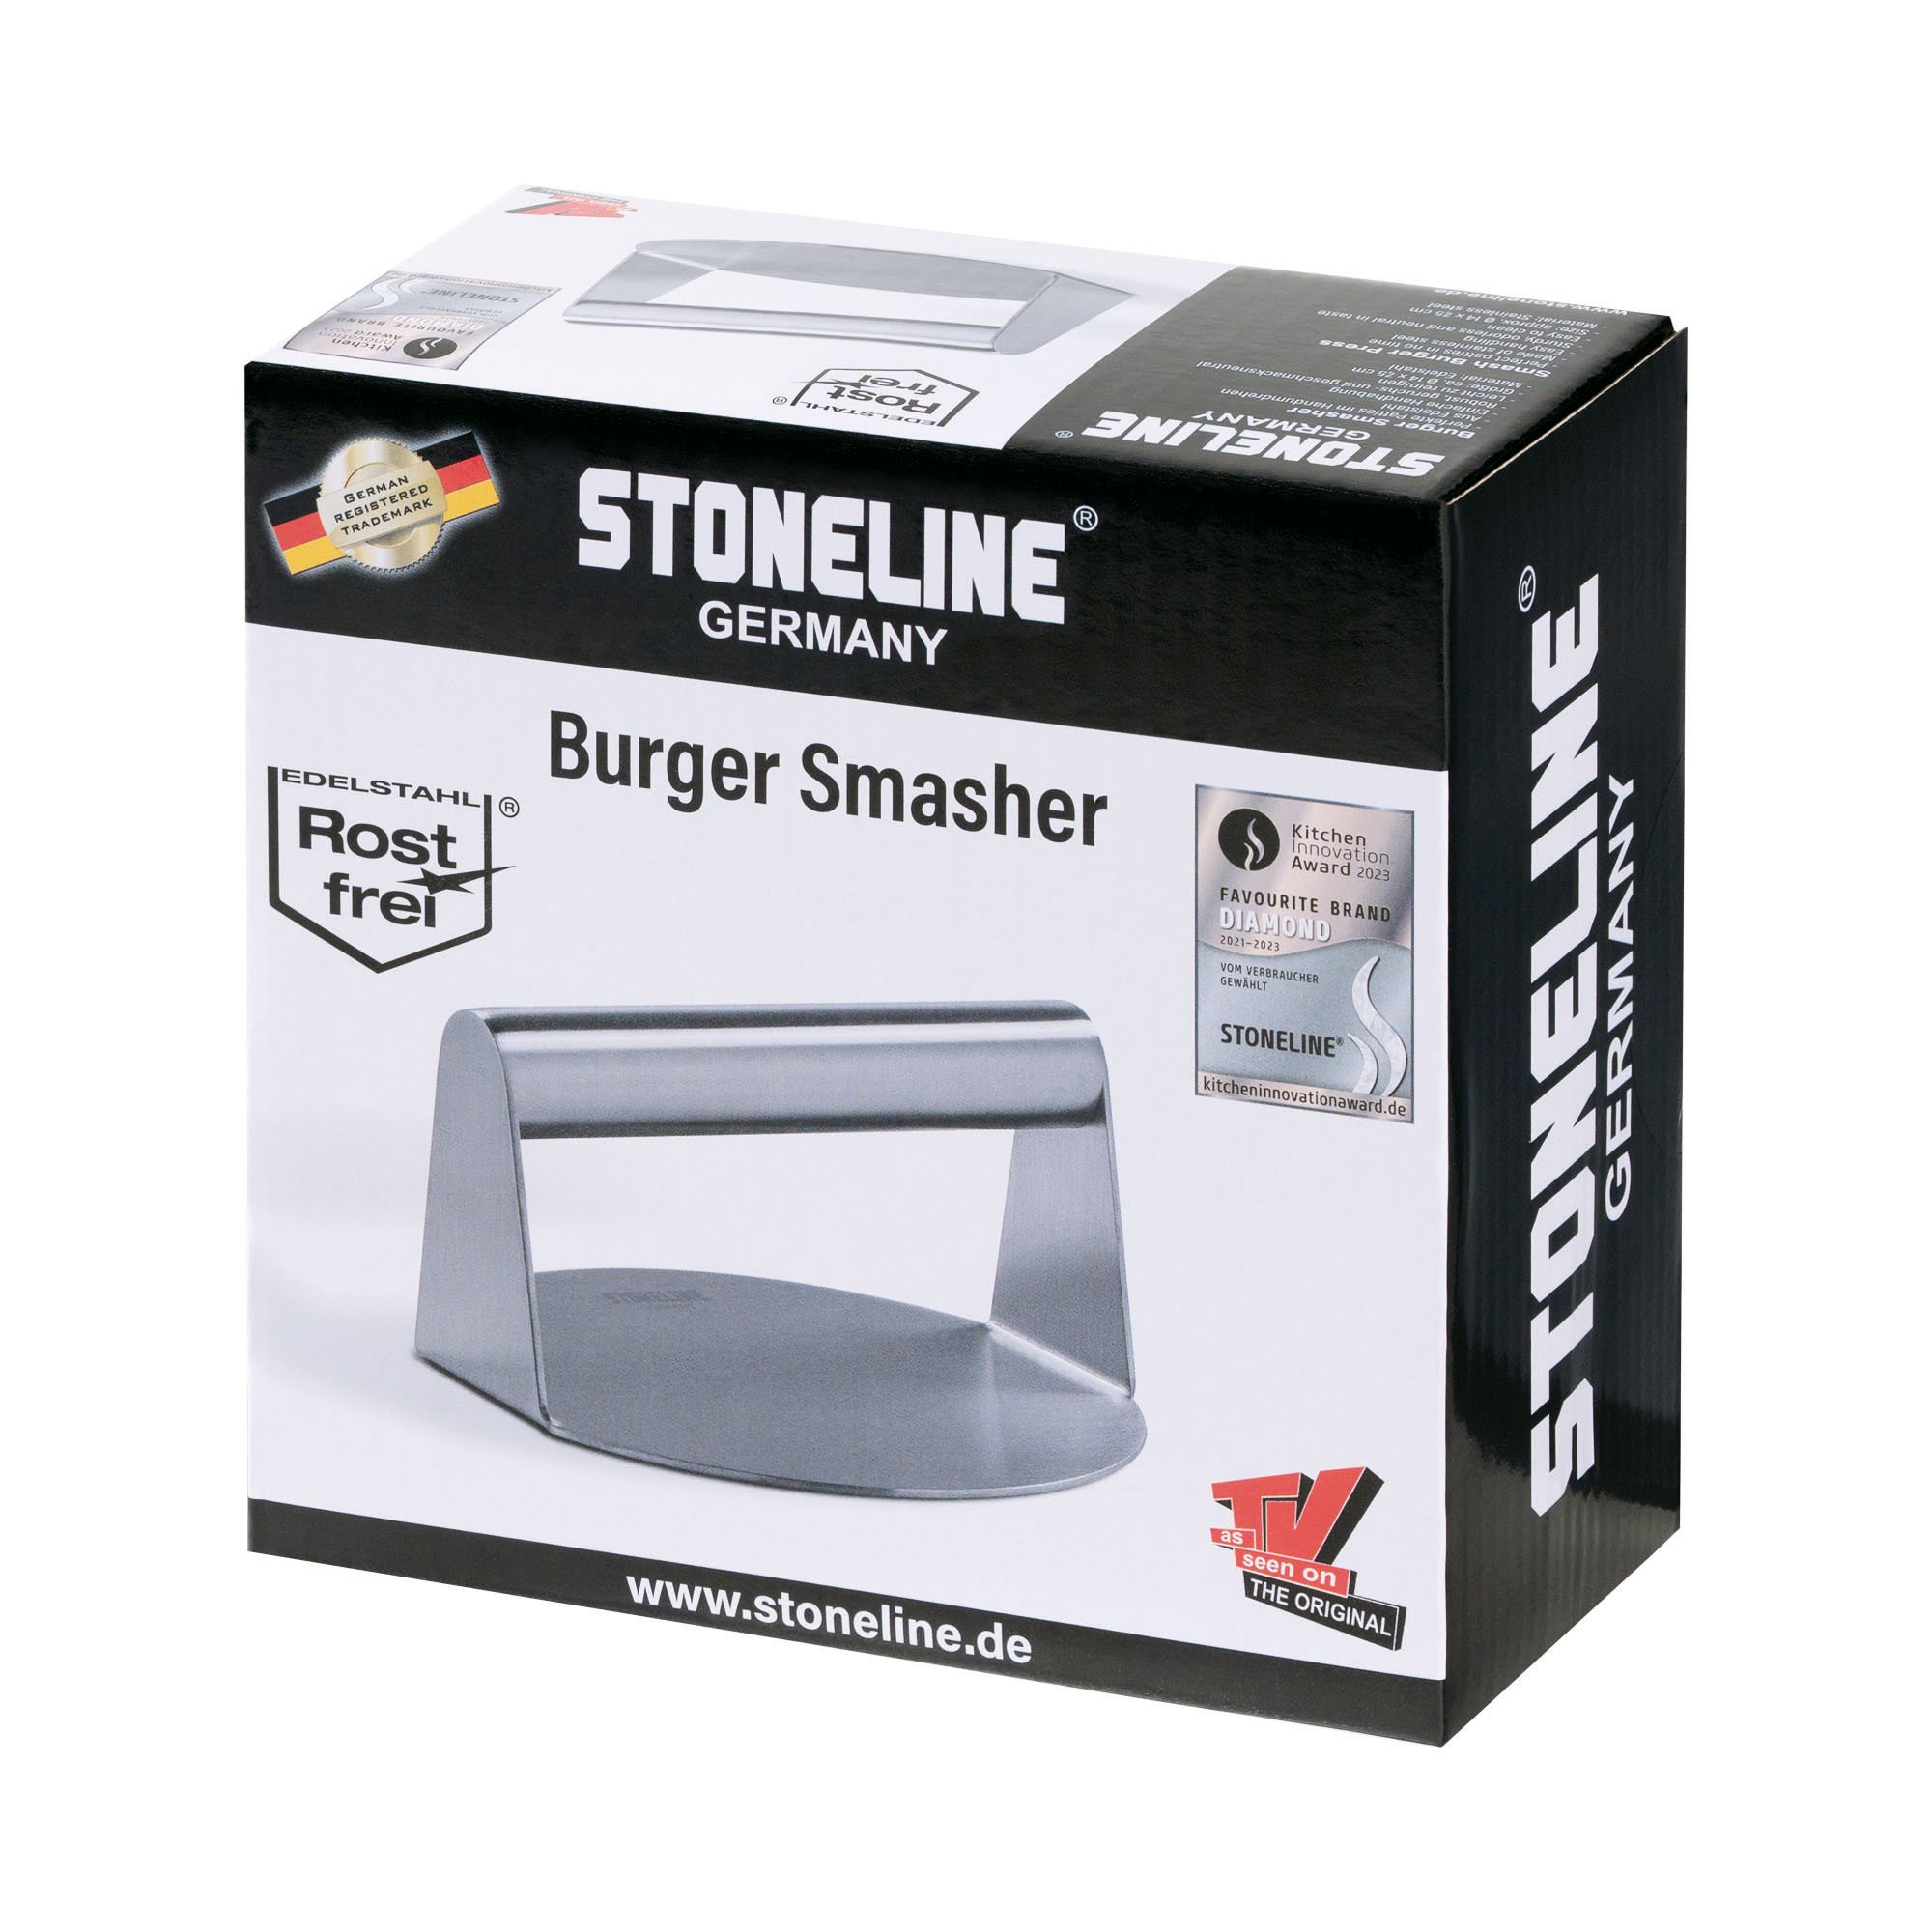 STONELINE® Smash Burger Press 14 cm, Burger Smasher, Patty Maker, Stainless Steel